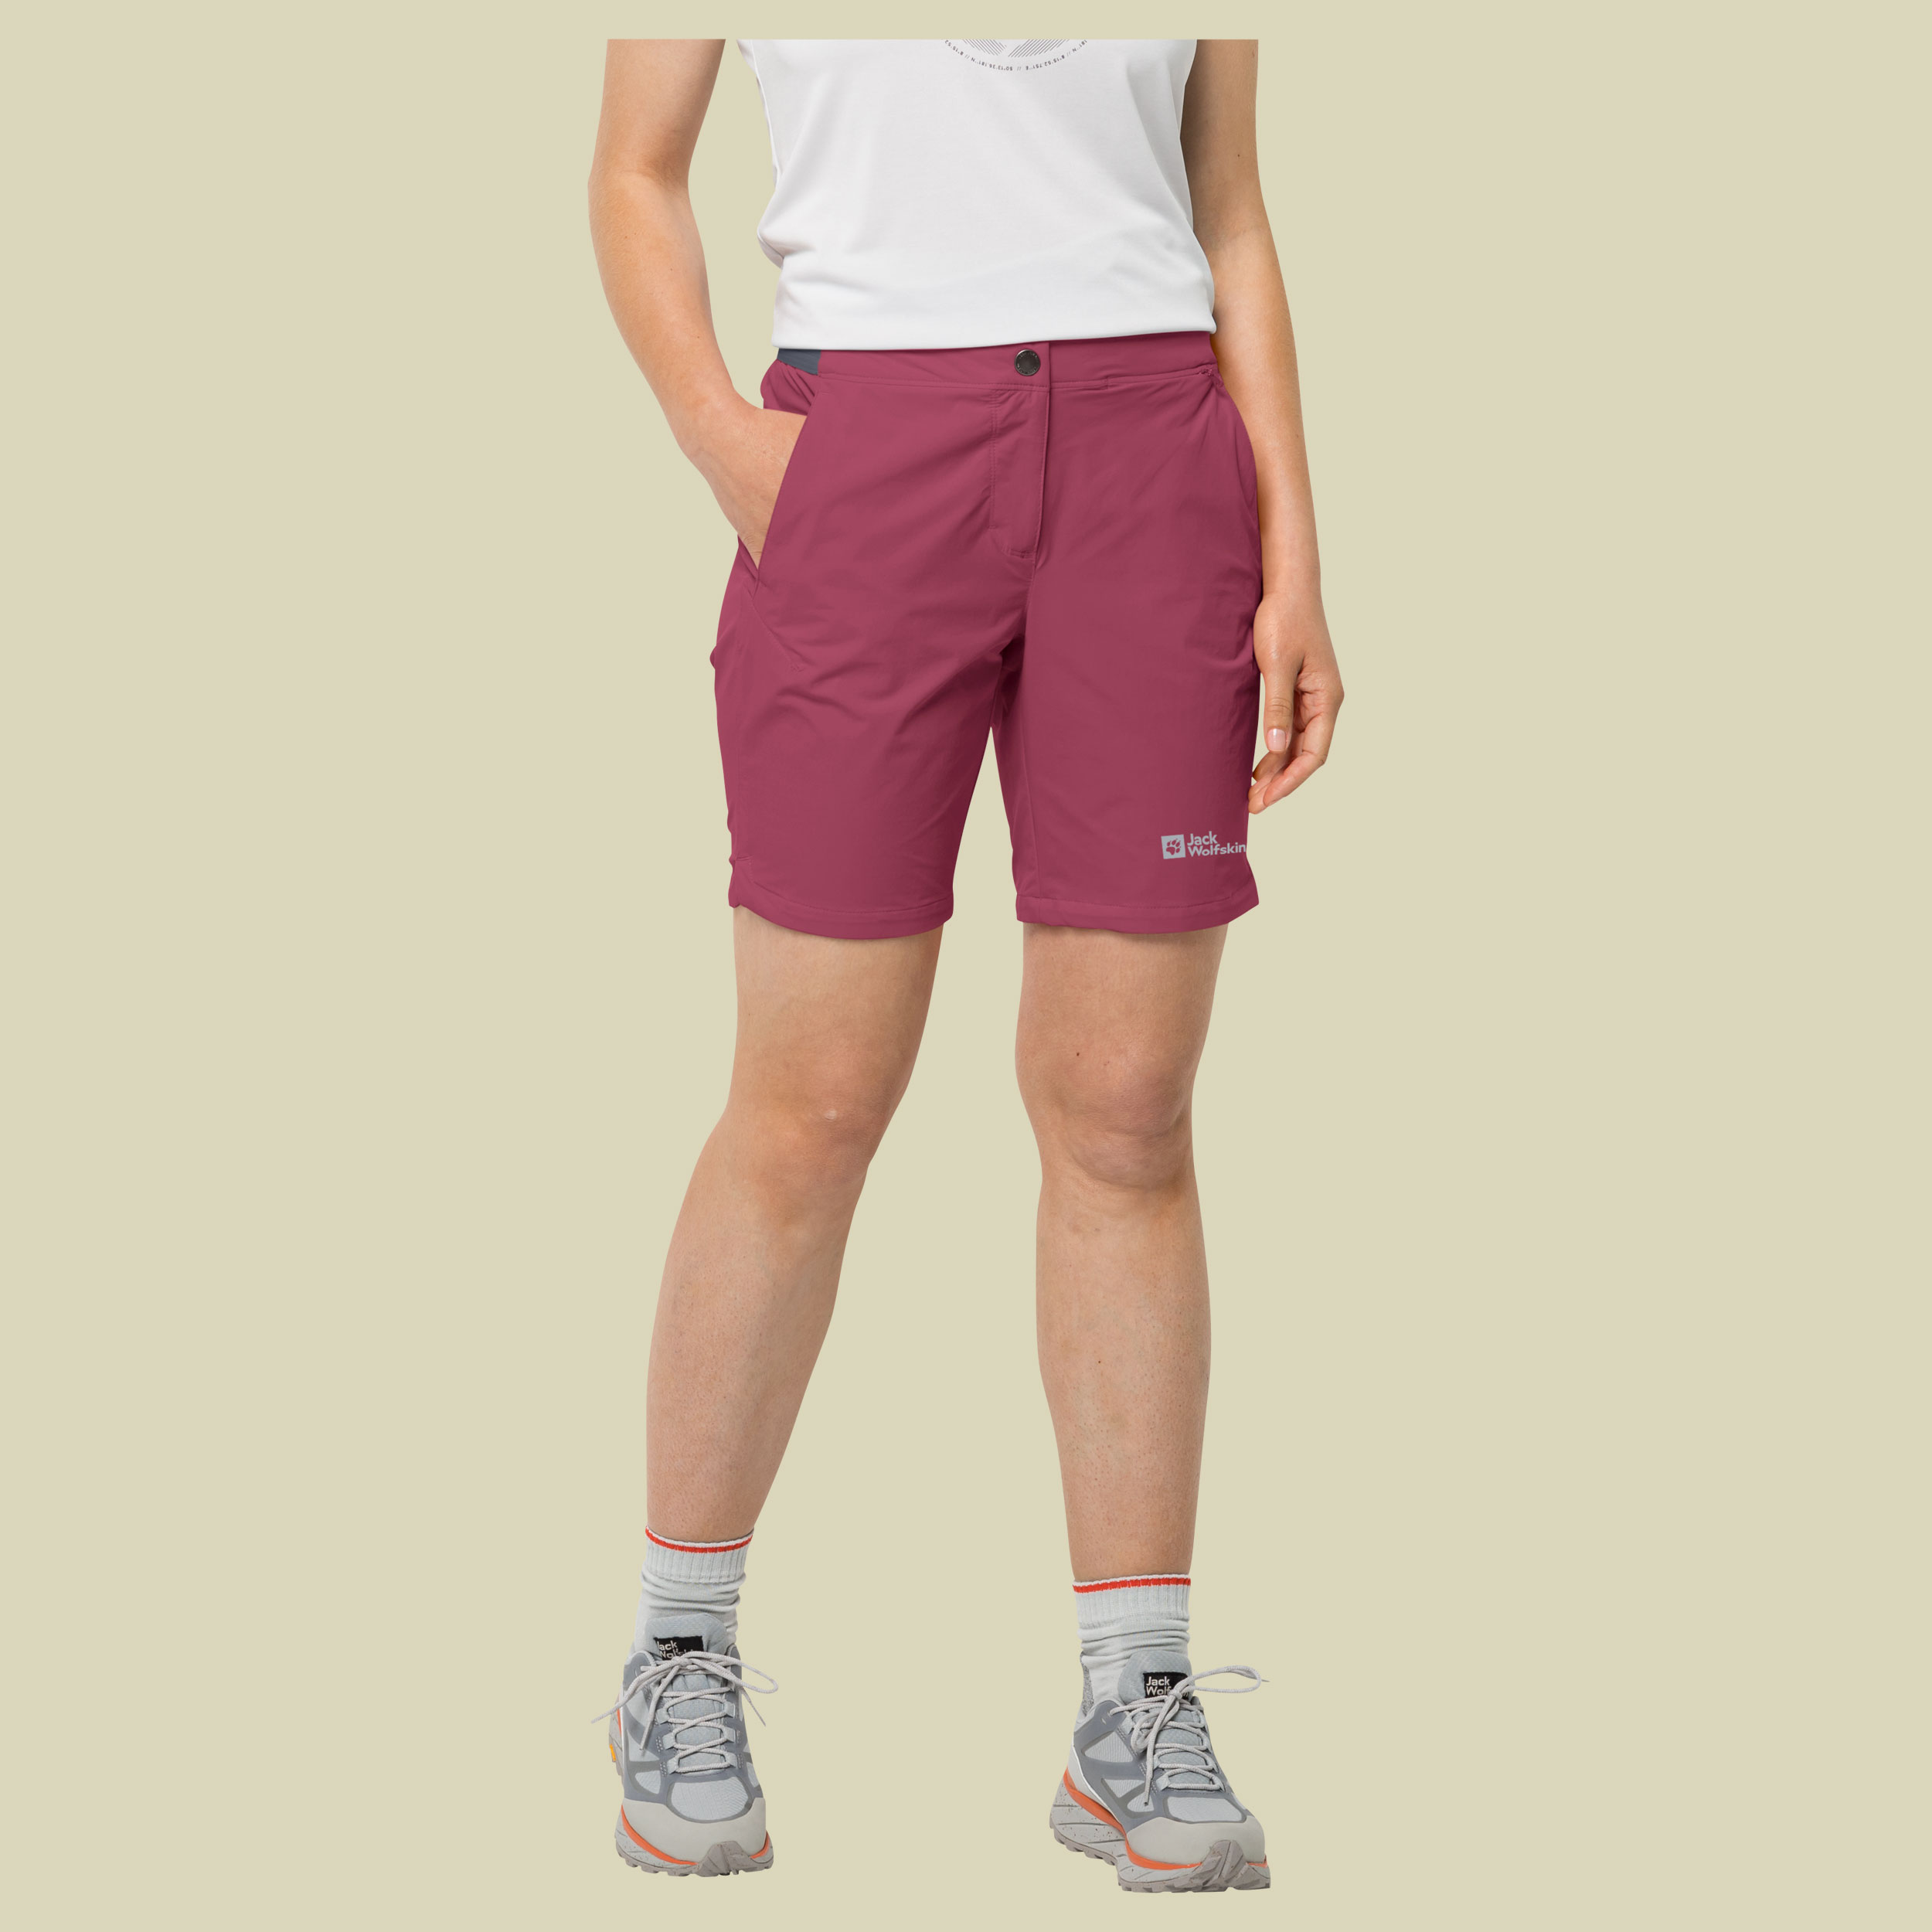 Hilltop Trail Shorts Women Größe 38 Farbe sangria red